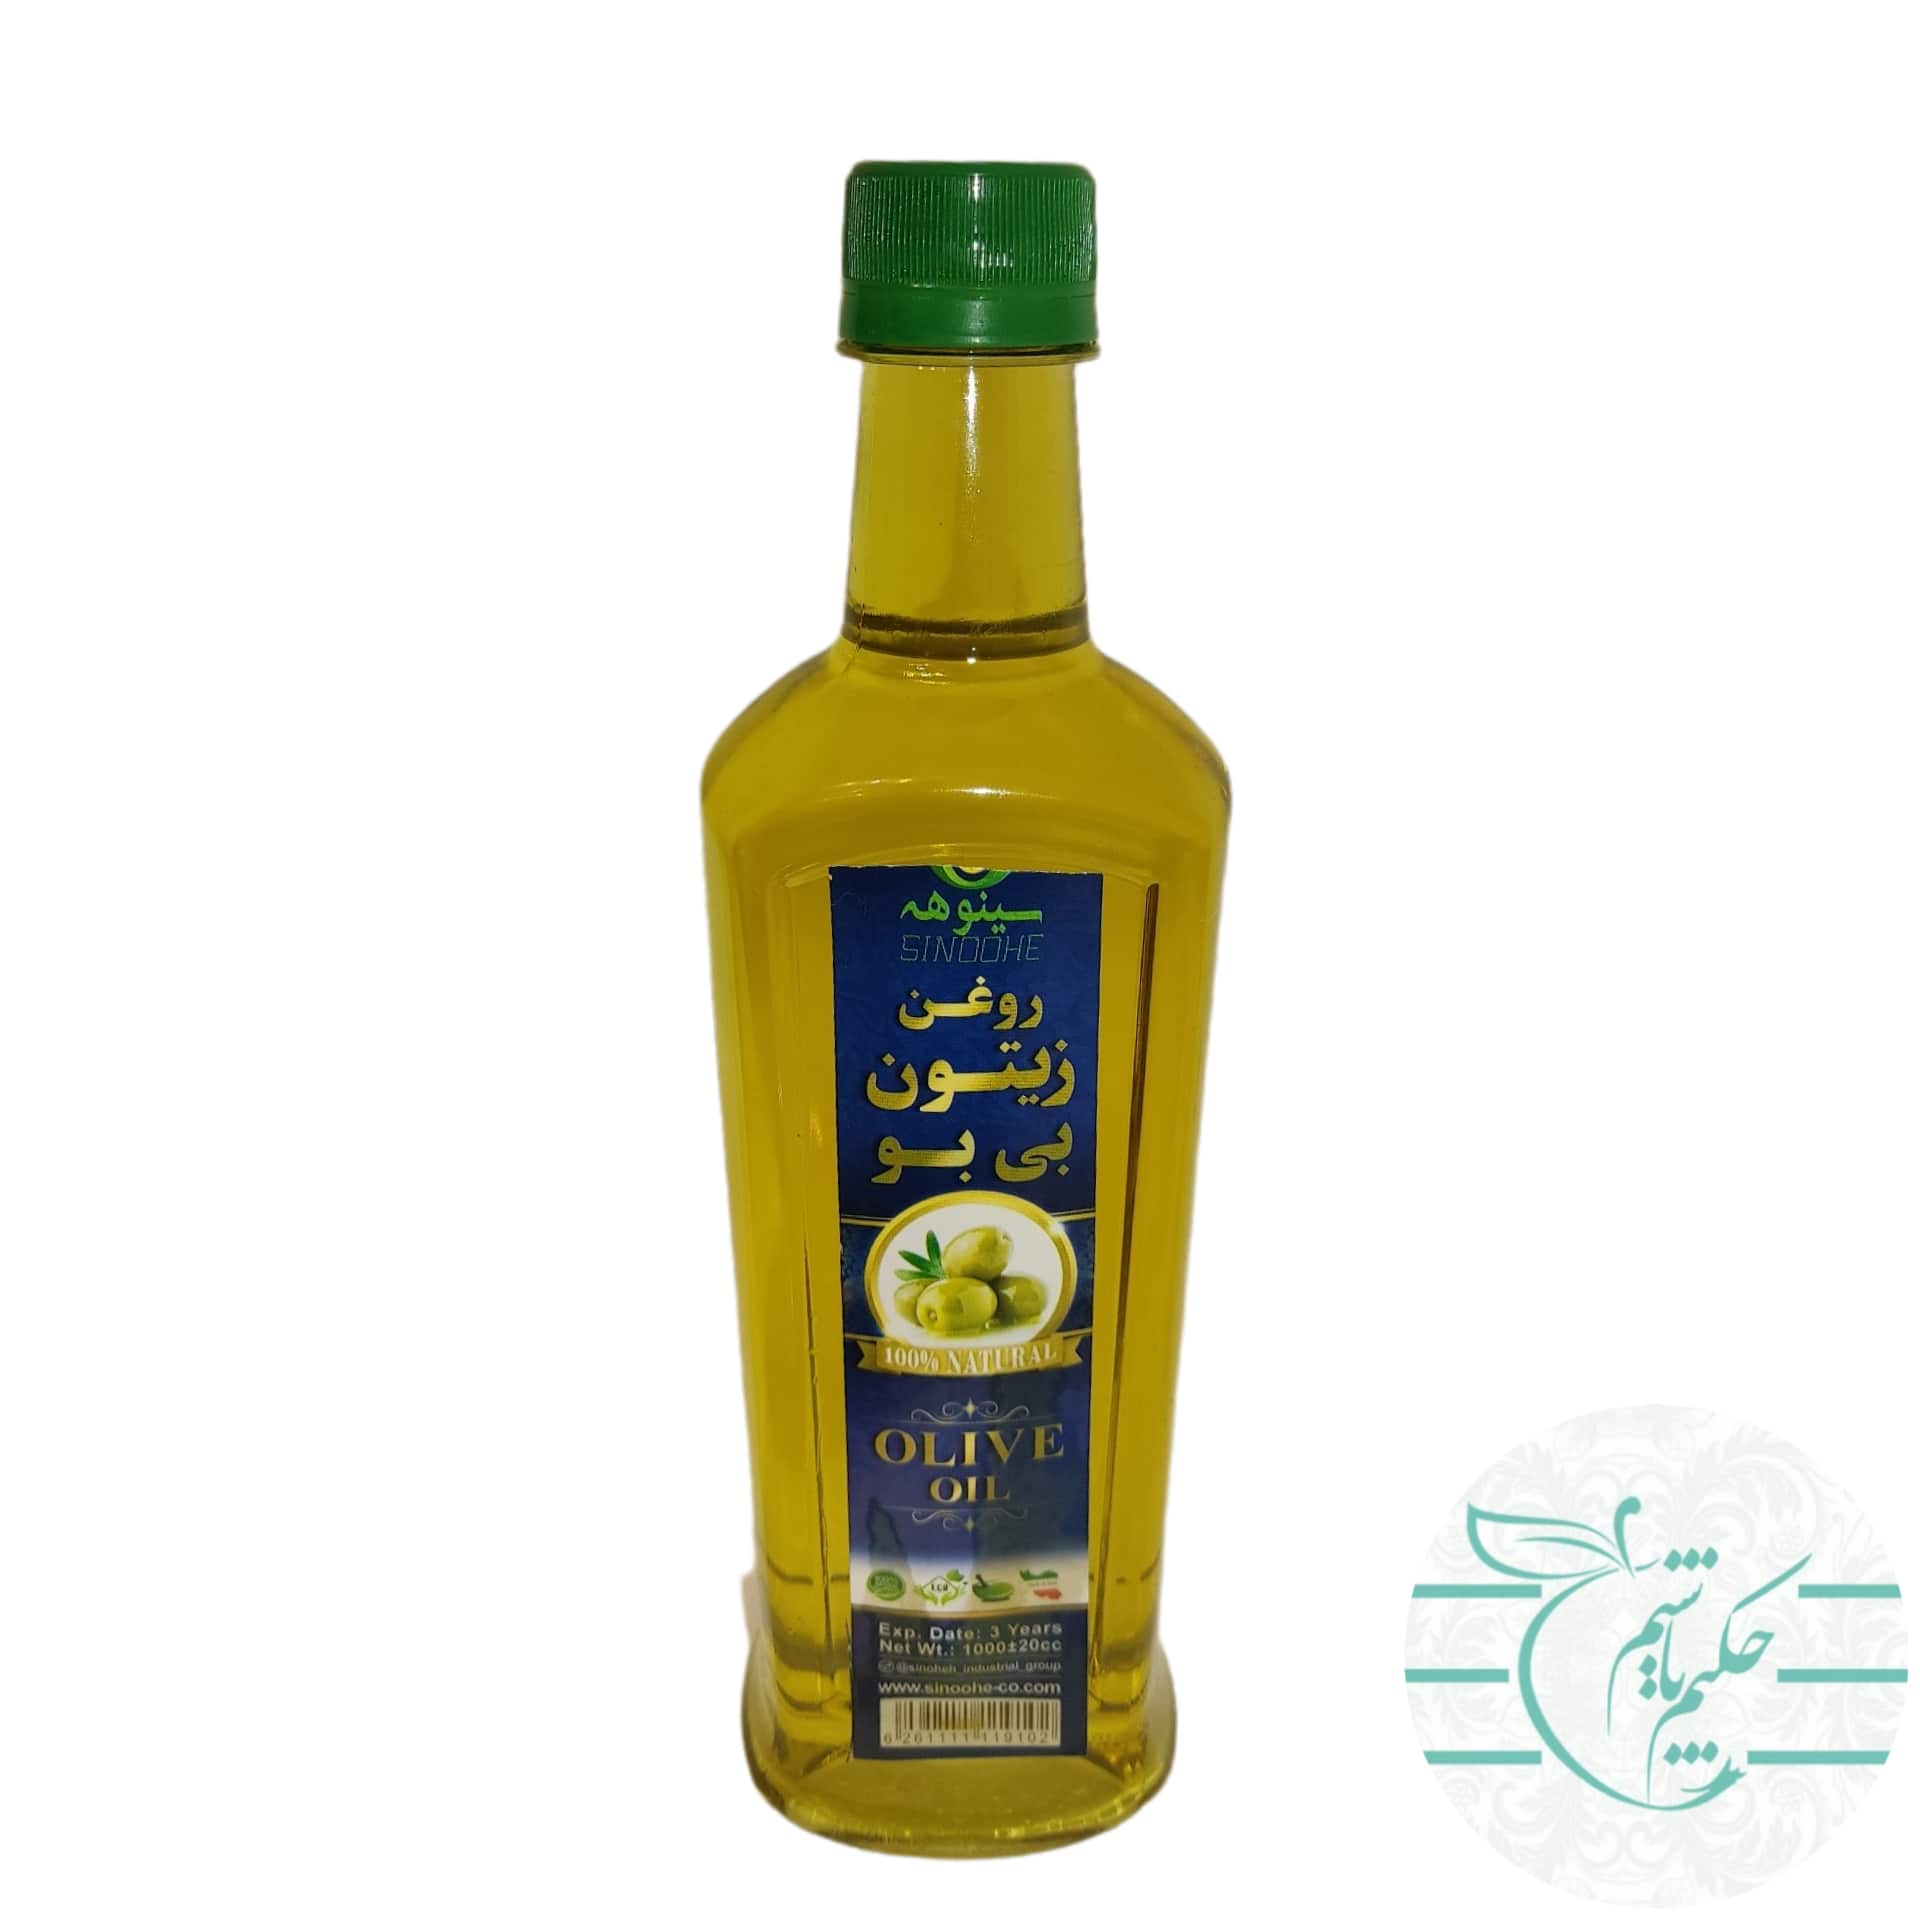 Half a liter of odorless olive oil min